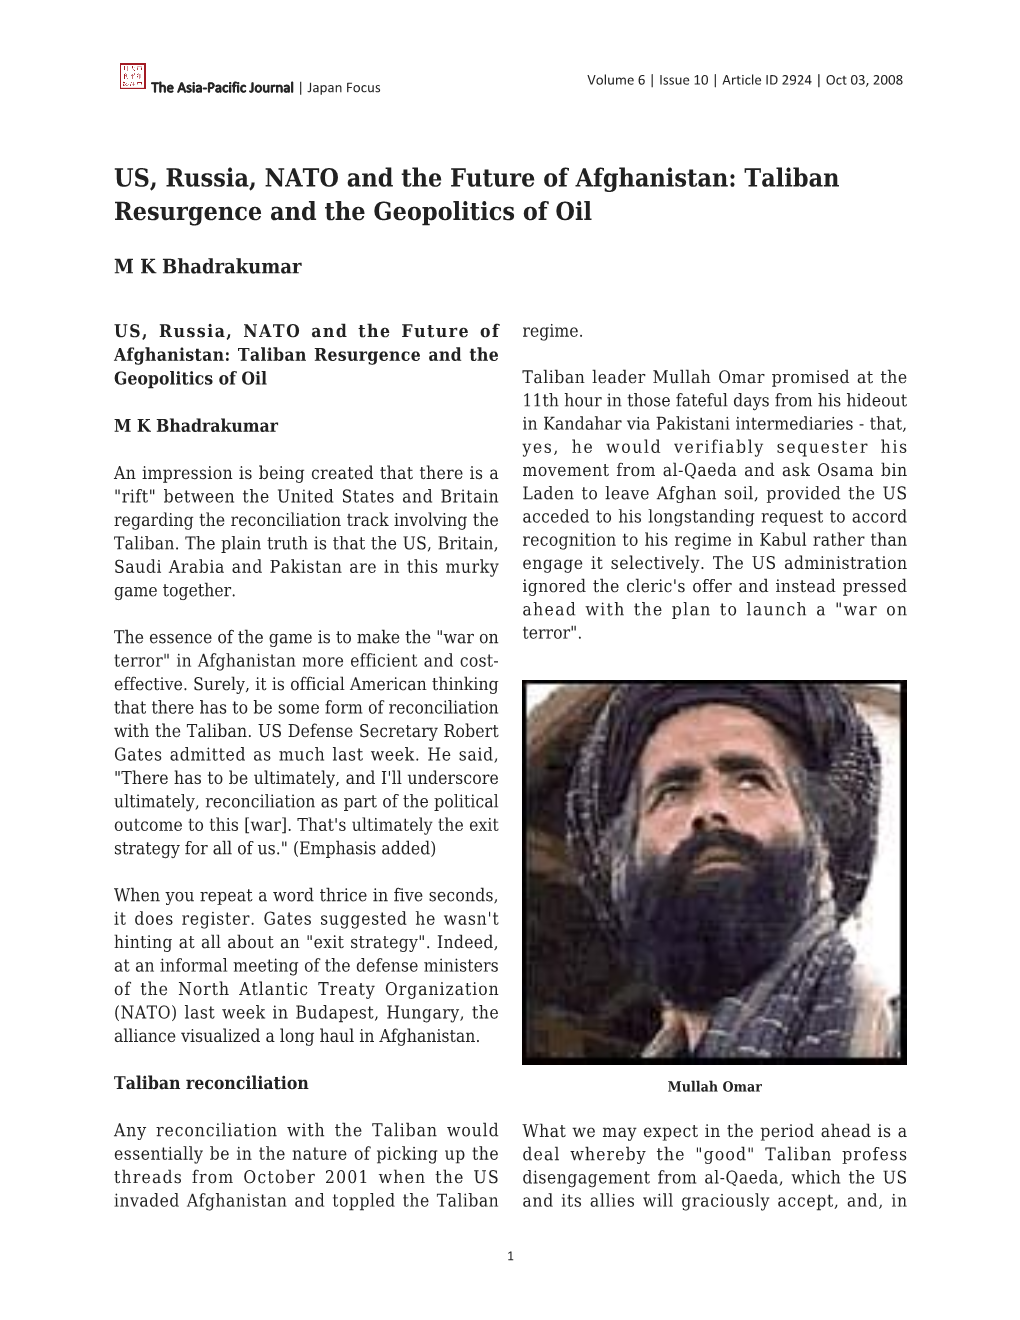 Taliban Resurgence and the Geopolitics of Oil